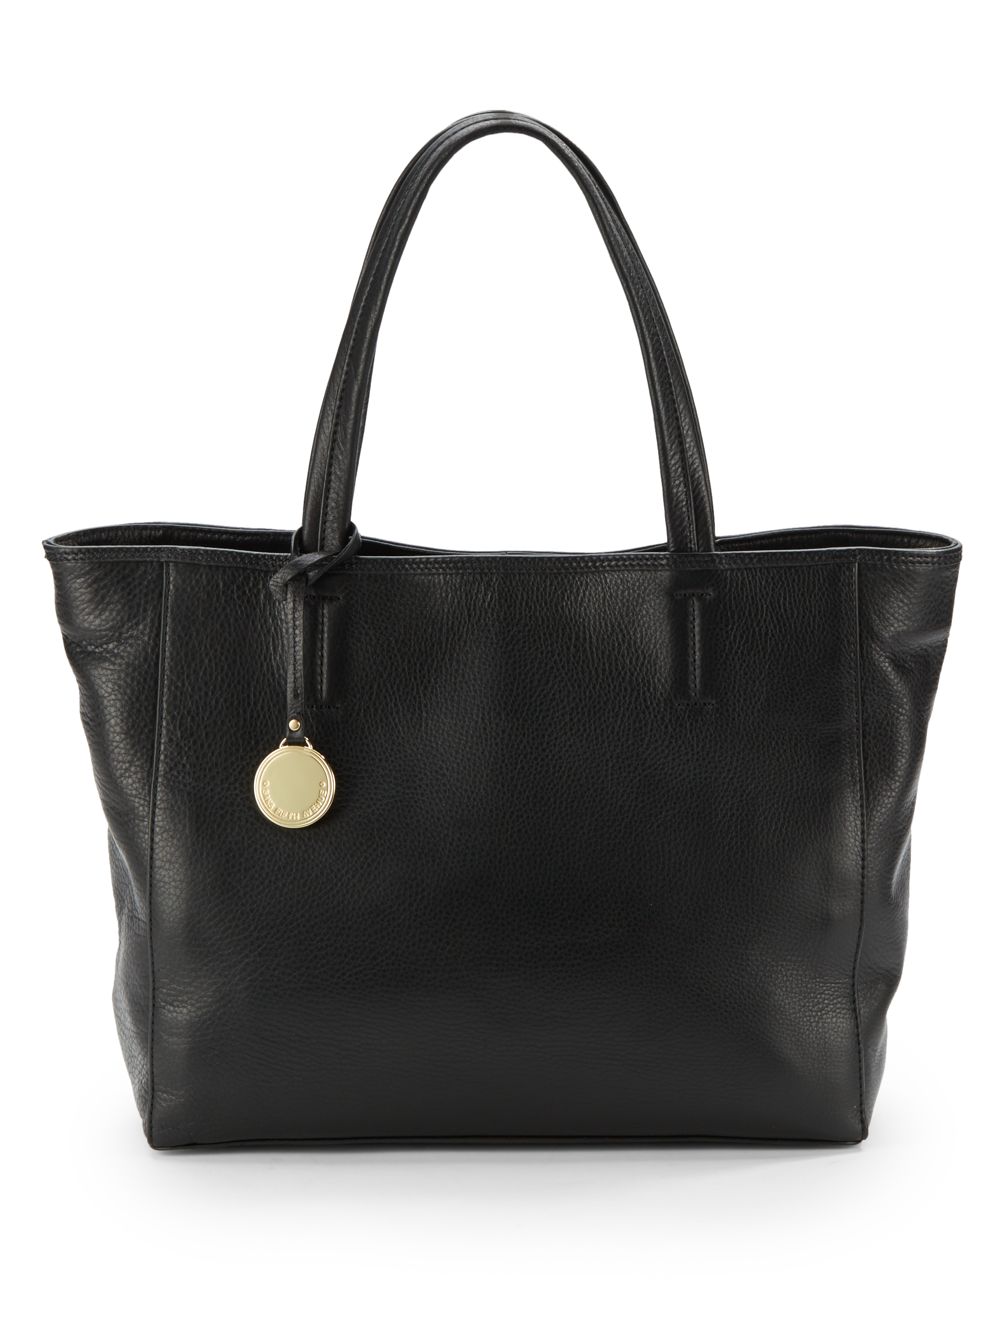 Saks Fifth Avenue Black Leather Tote Bag in Black | Lyst